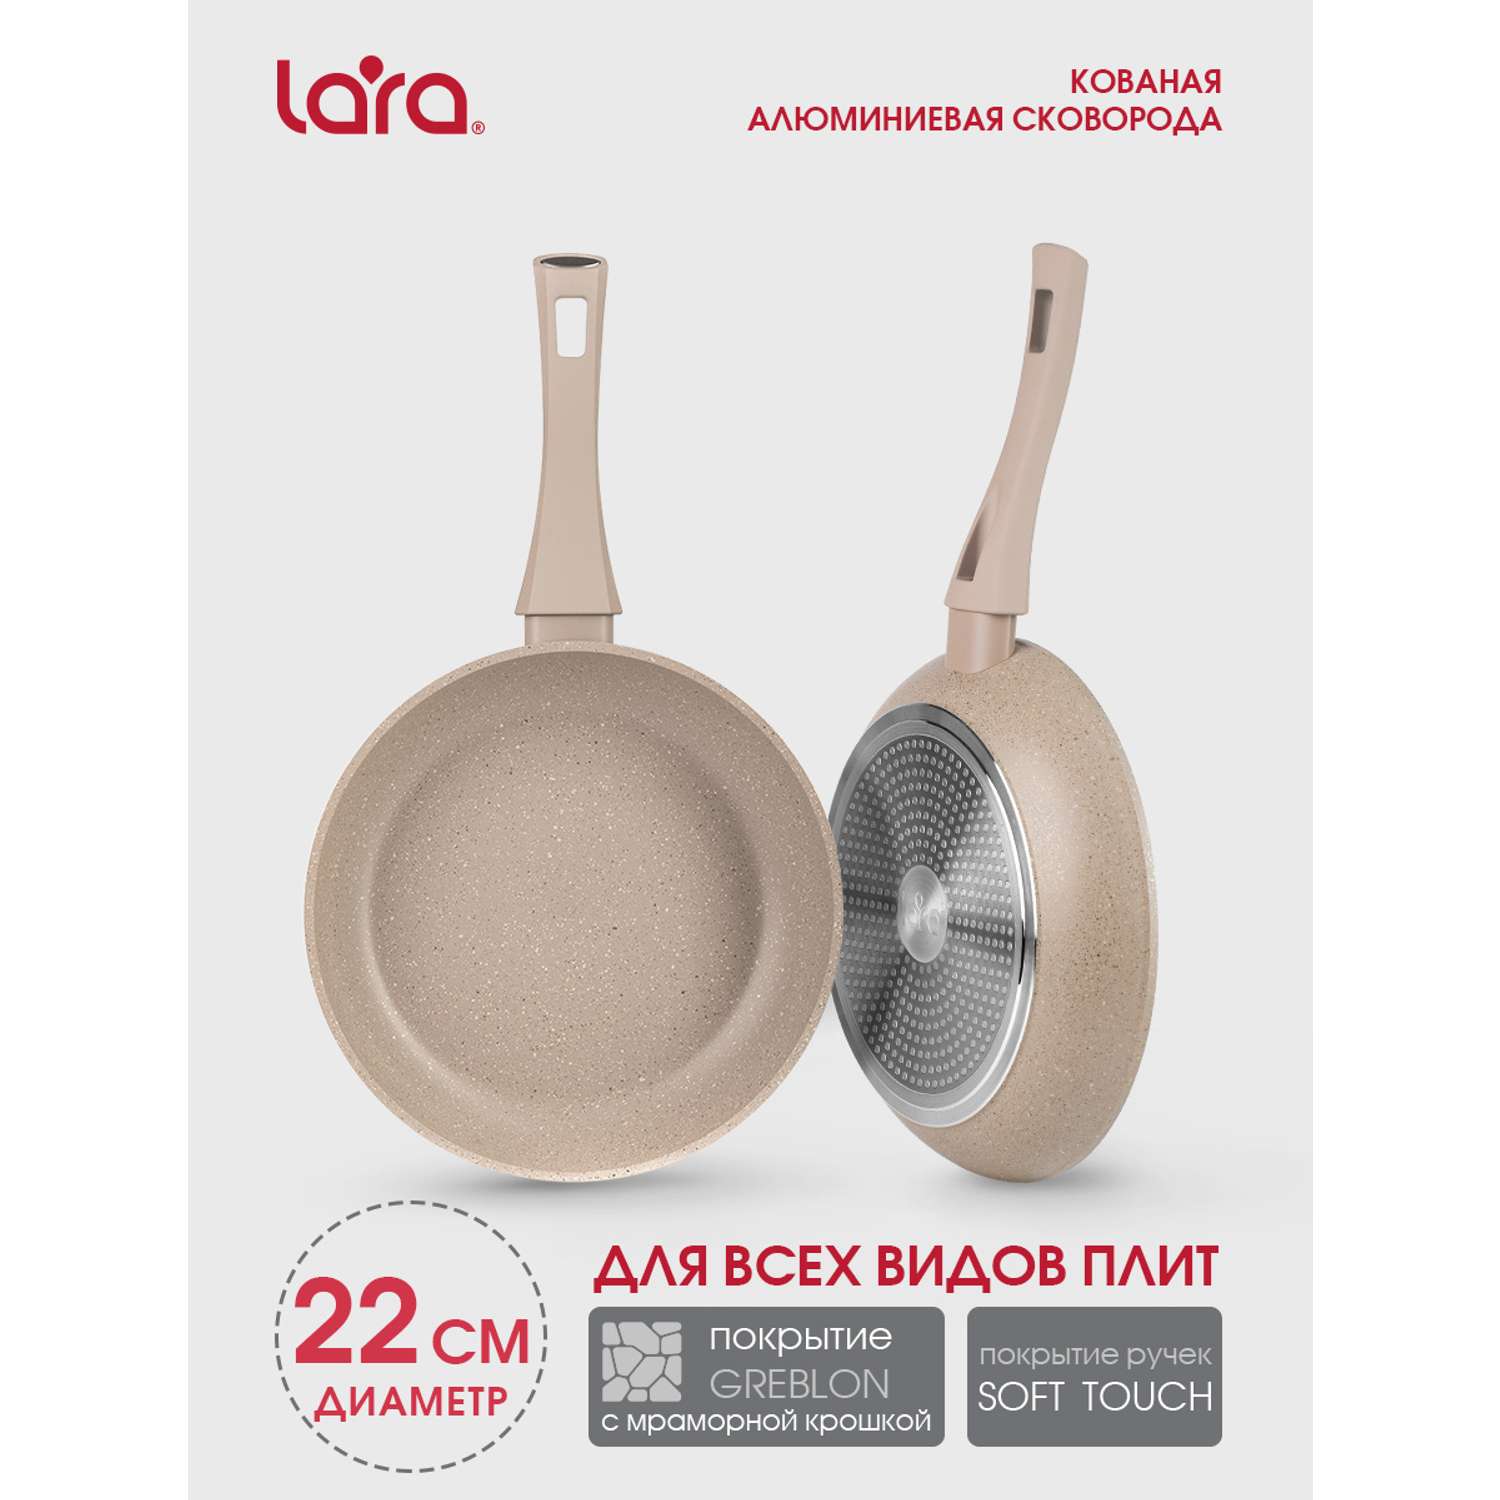 Сковорода LARA Carmeliya 22 бежевая кованный алюминий покрытие greblon диаметр 22 см - фото 1